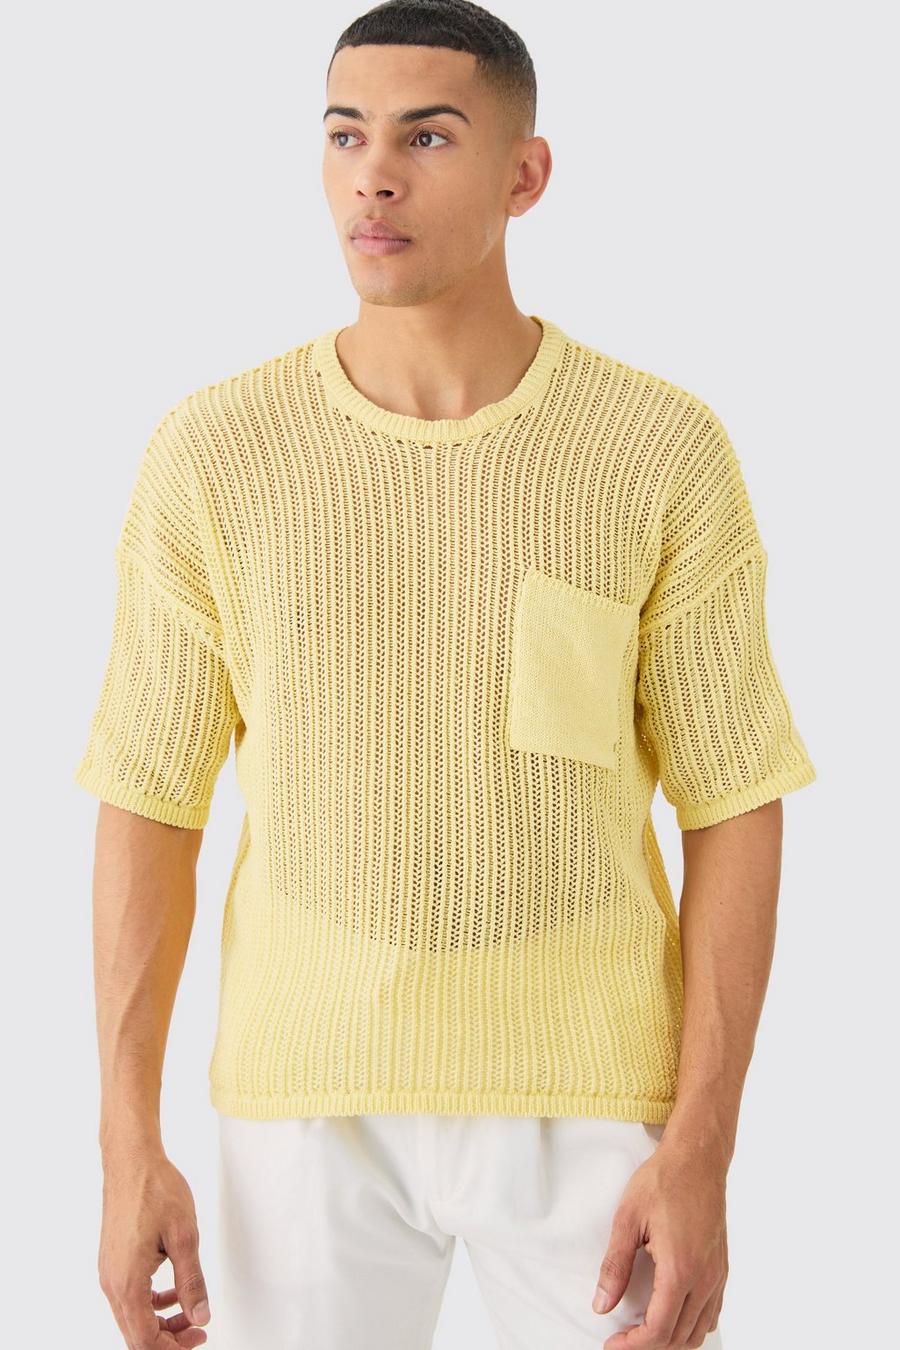 Oversize T-Shirt in Gelb mit Tasche, Yellow image number 1